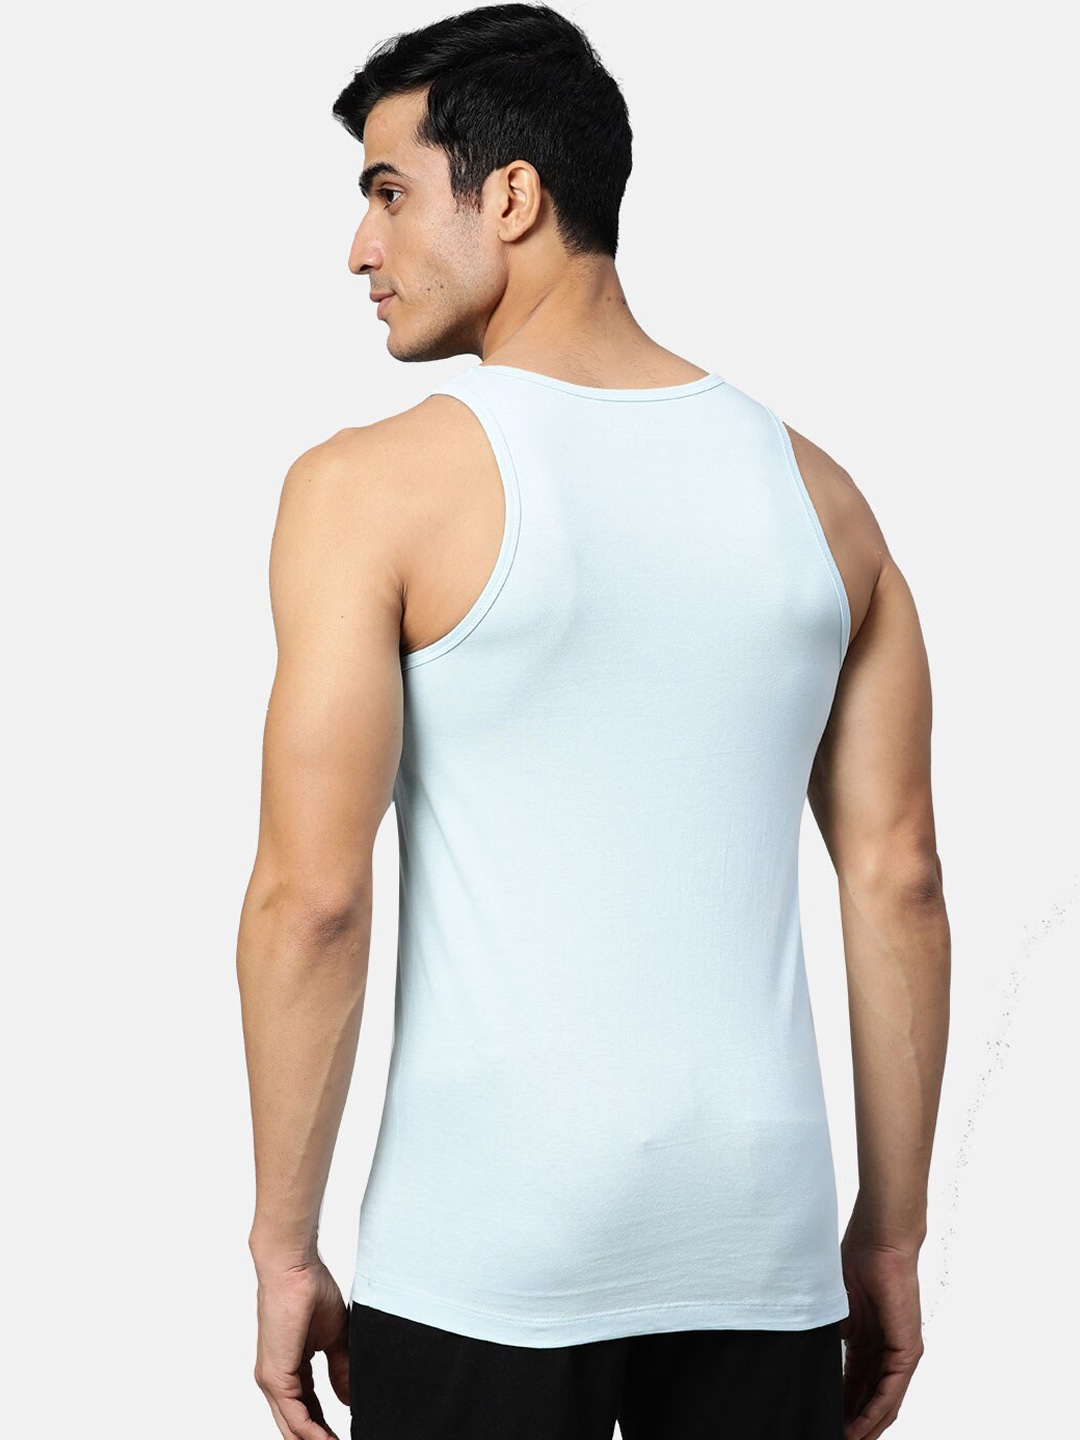 Clothing Innerwear Vests | Almo Wear Men Pack Of 5 Solid Slim-Fit Cotton Innerwear Vests - AU85085